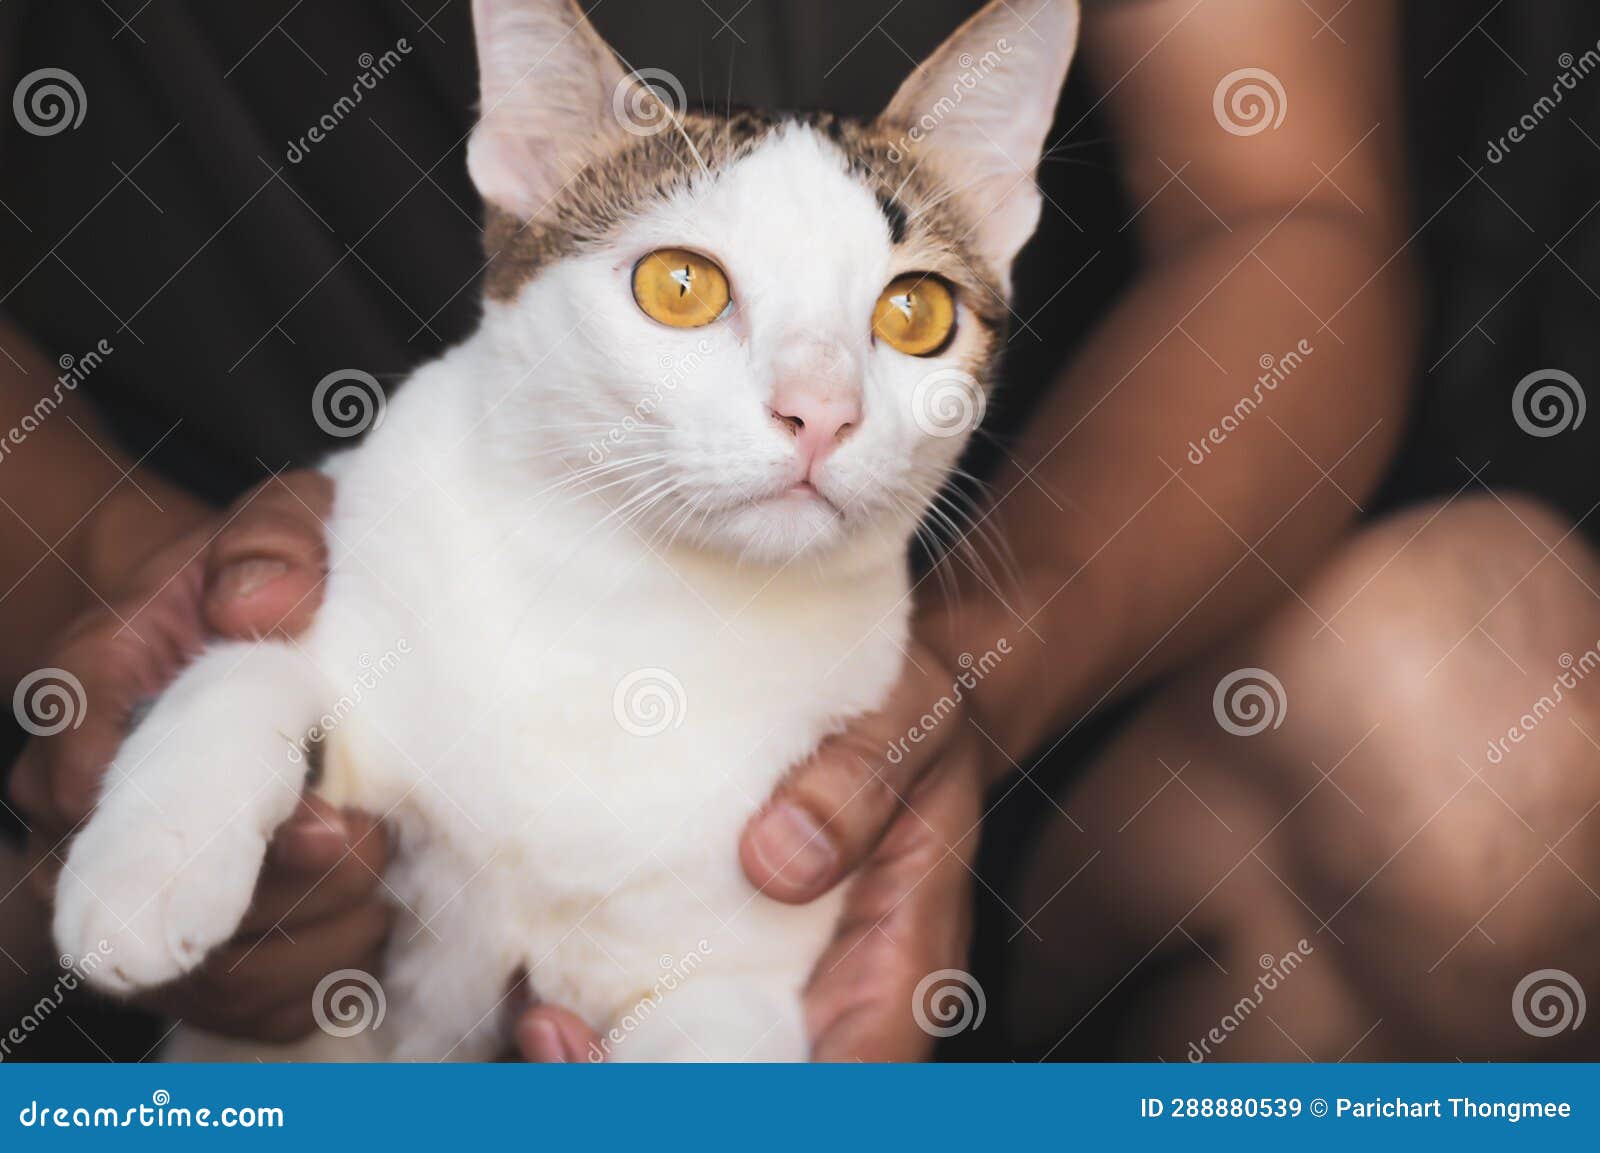 Curiosity Awakened Hand Holding Playful Black And White Cat On Two